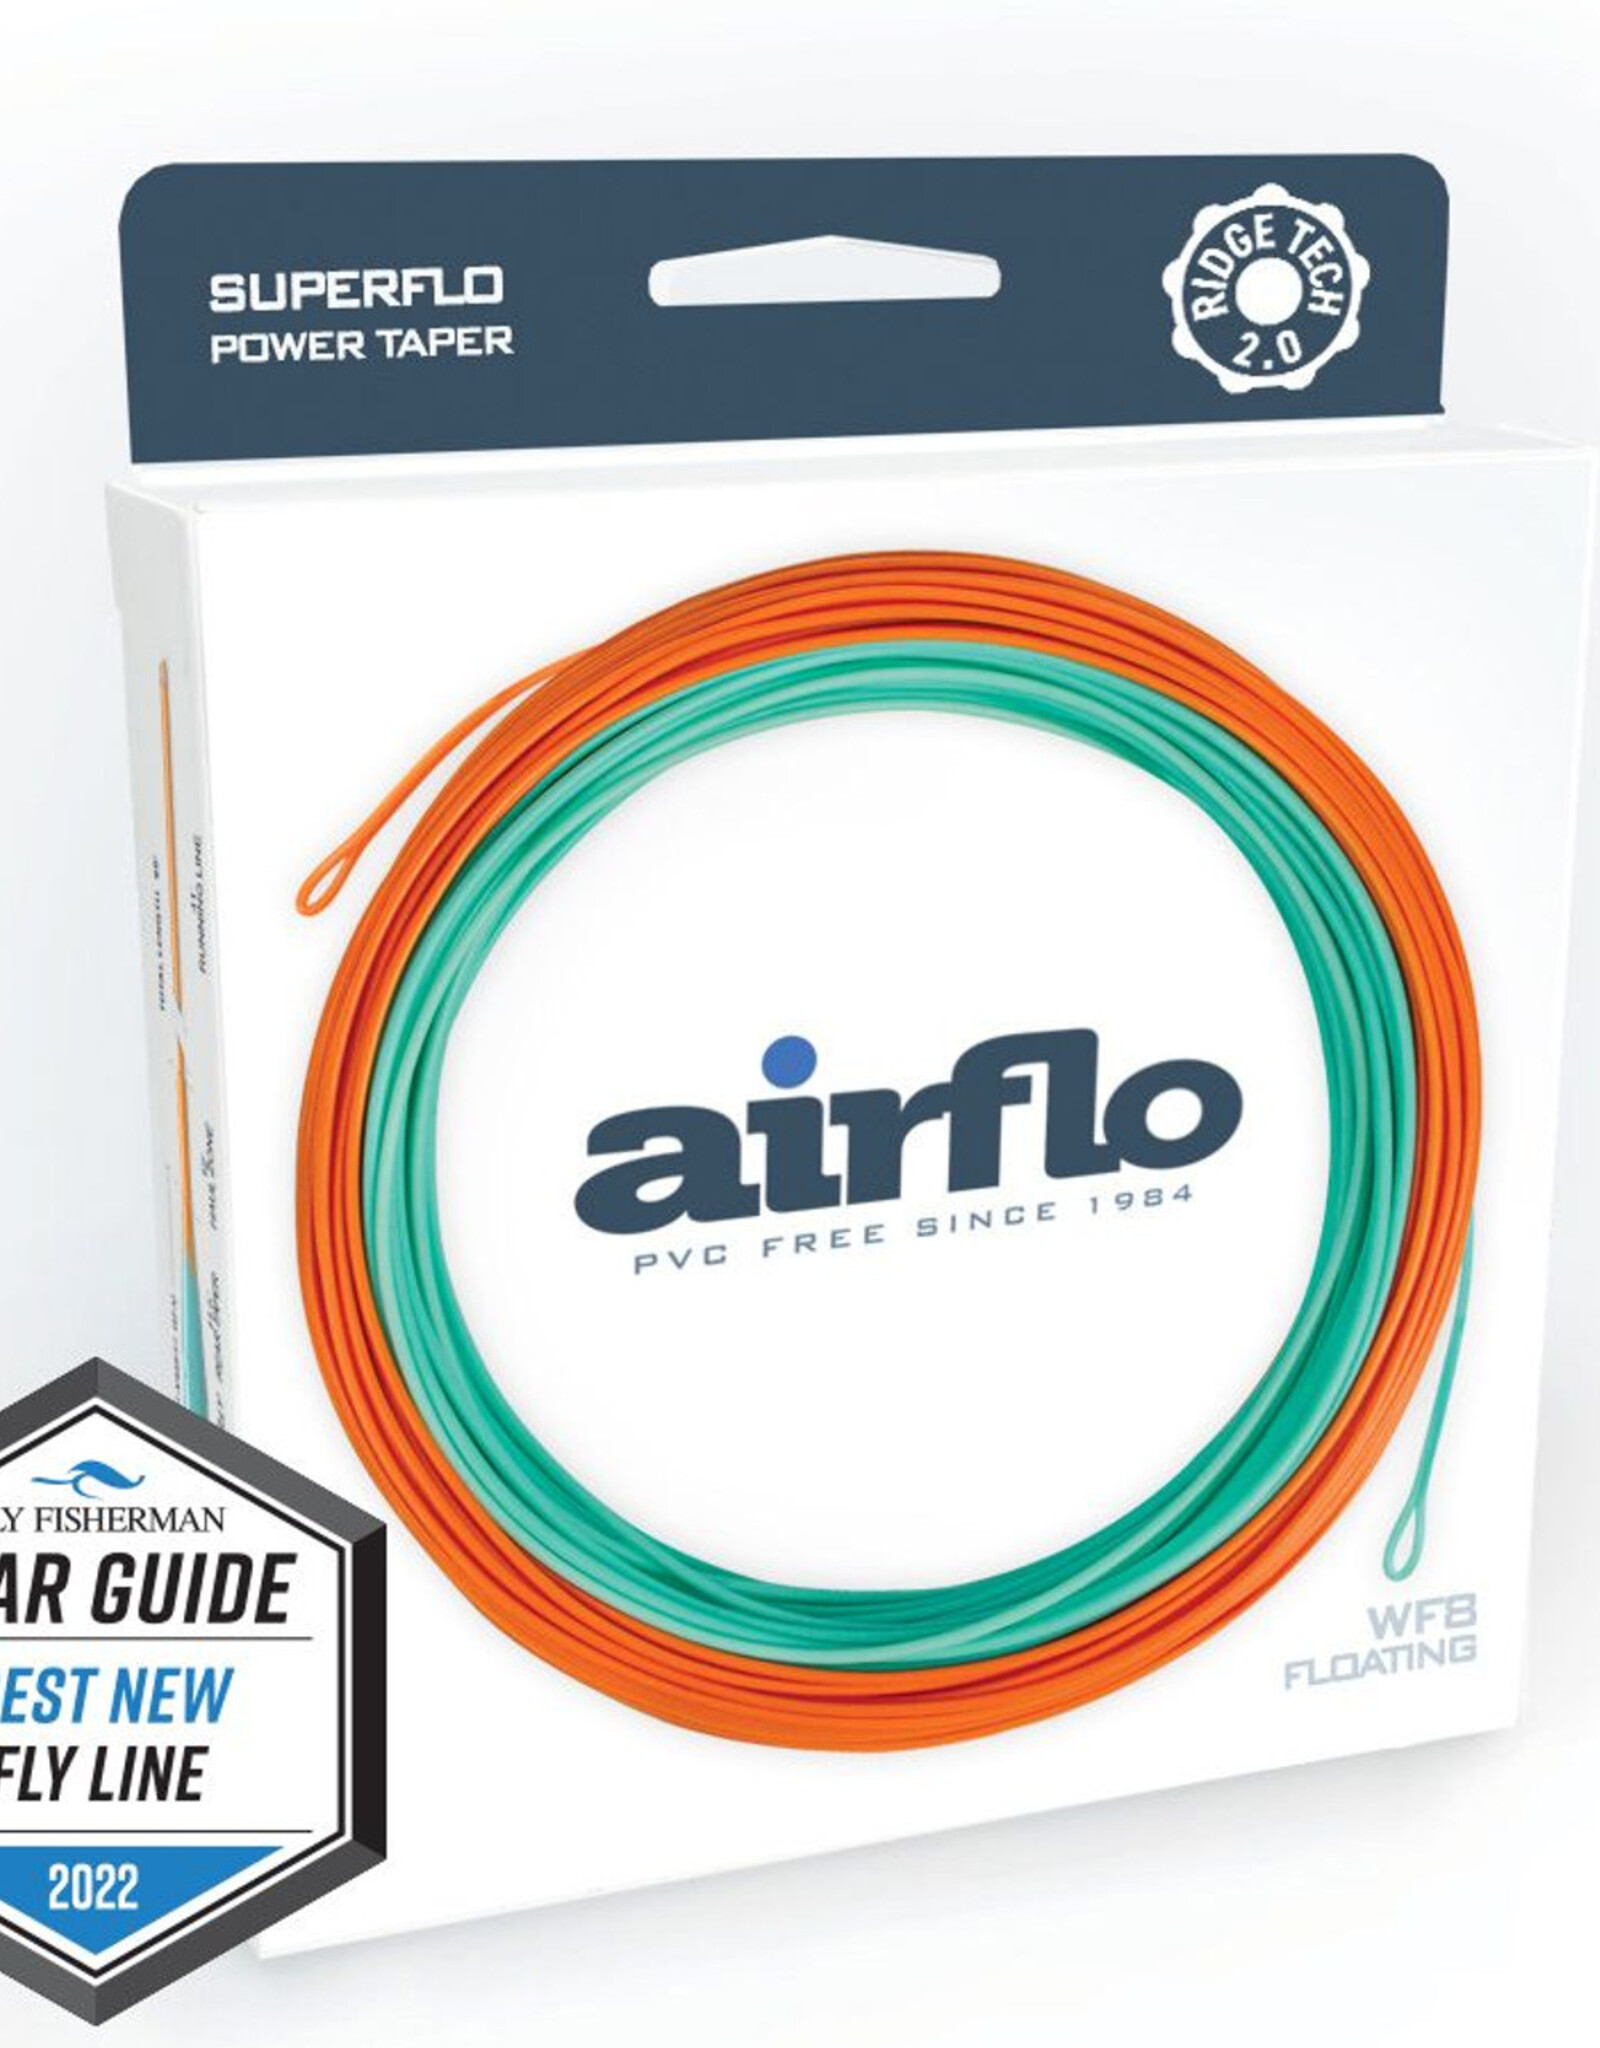 Airflo Superflo Power Taper Ridge Tech 2.0